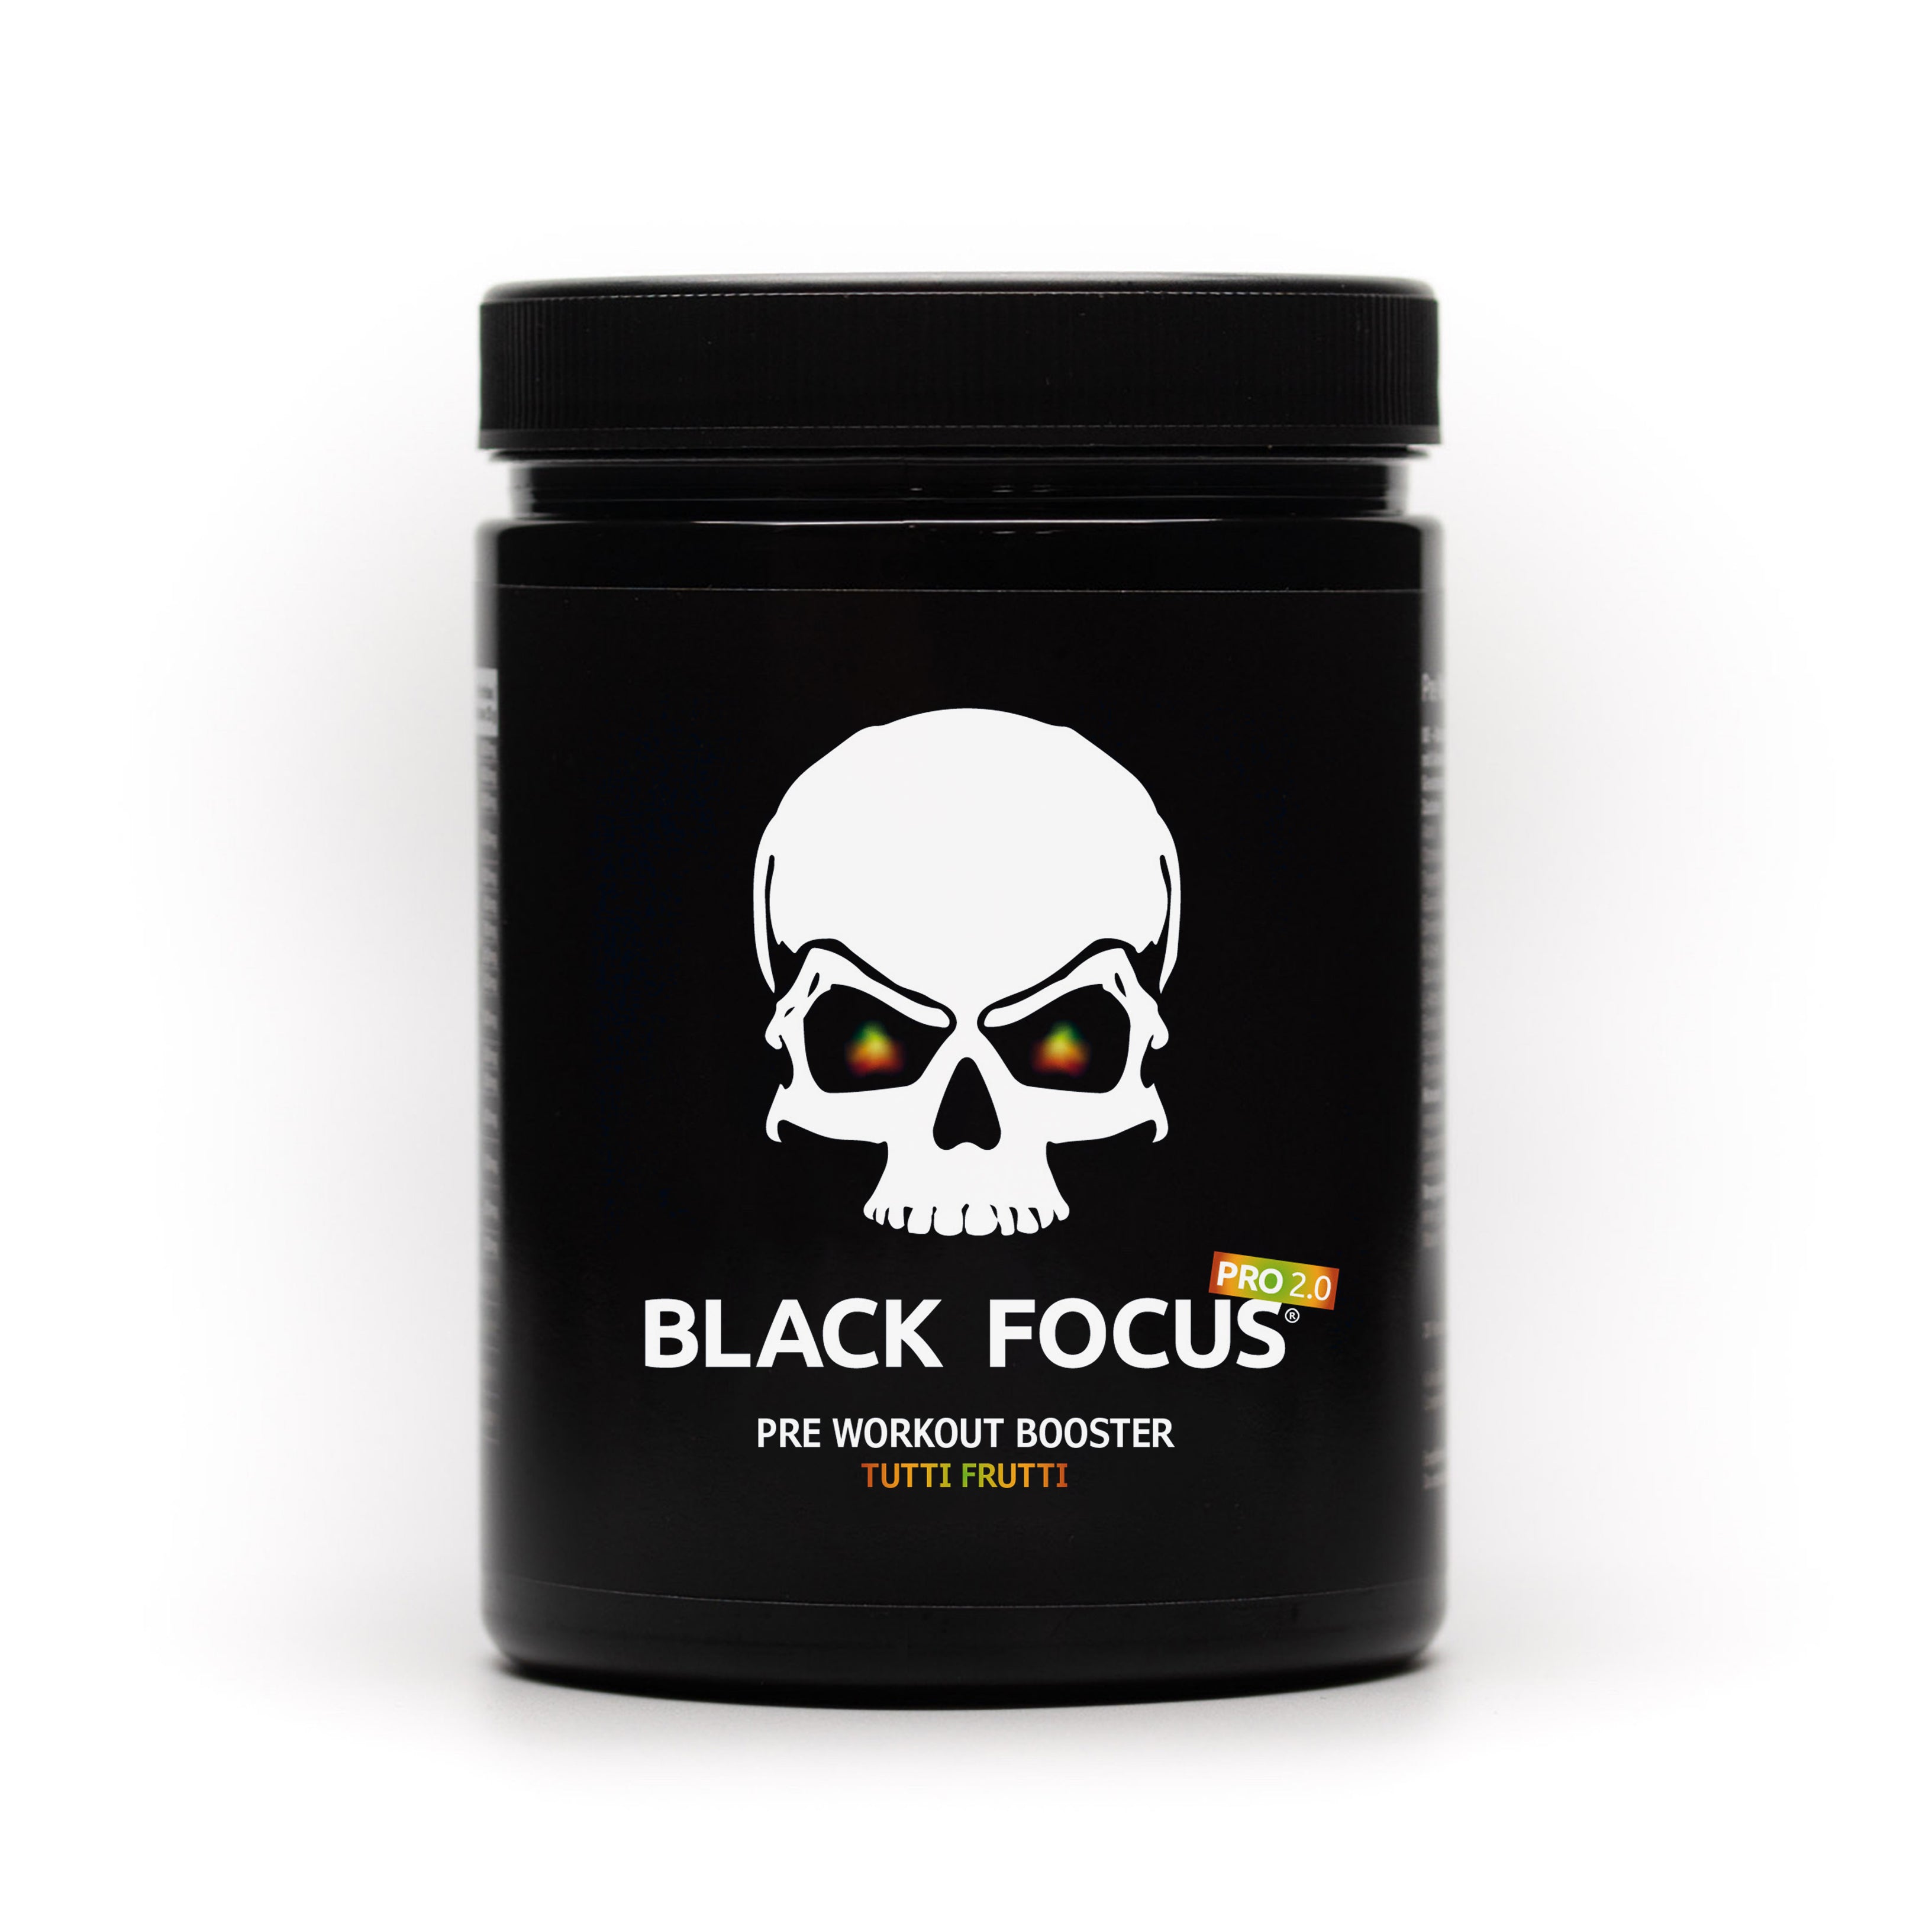 Black Focus Pro 2.0 - Pre Workout Booster